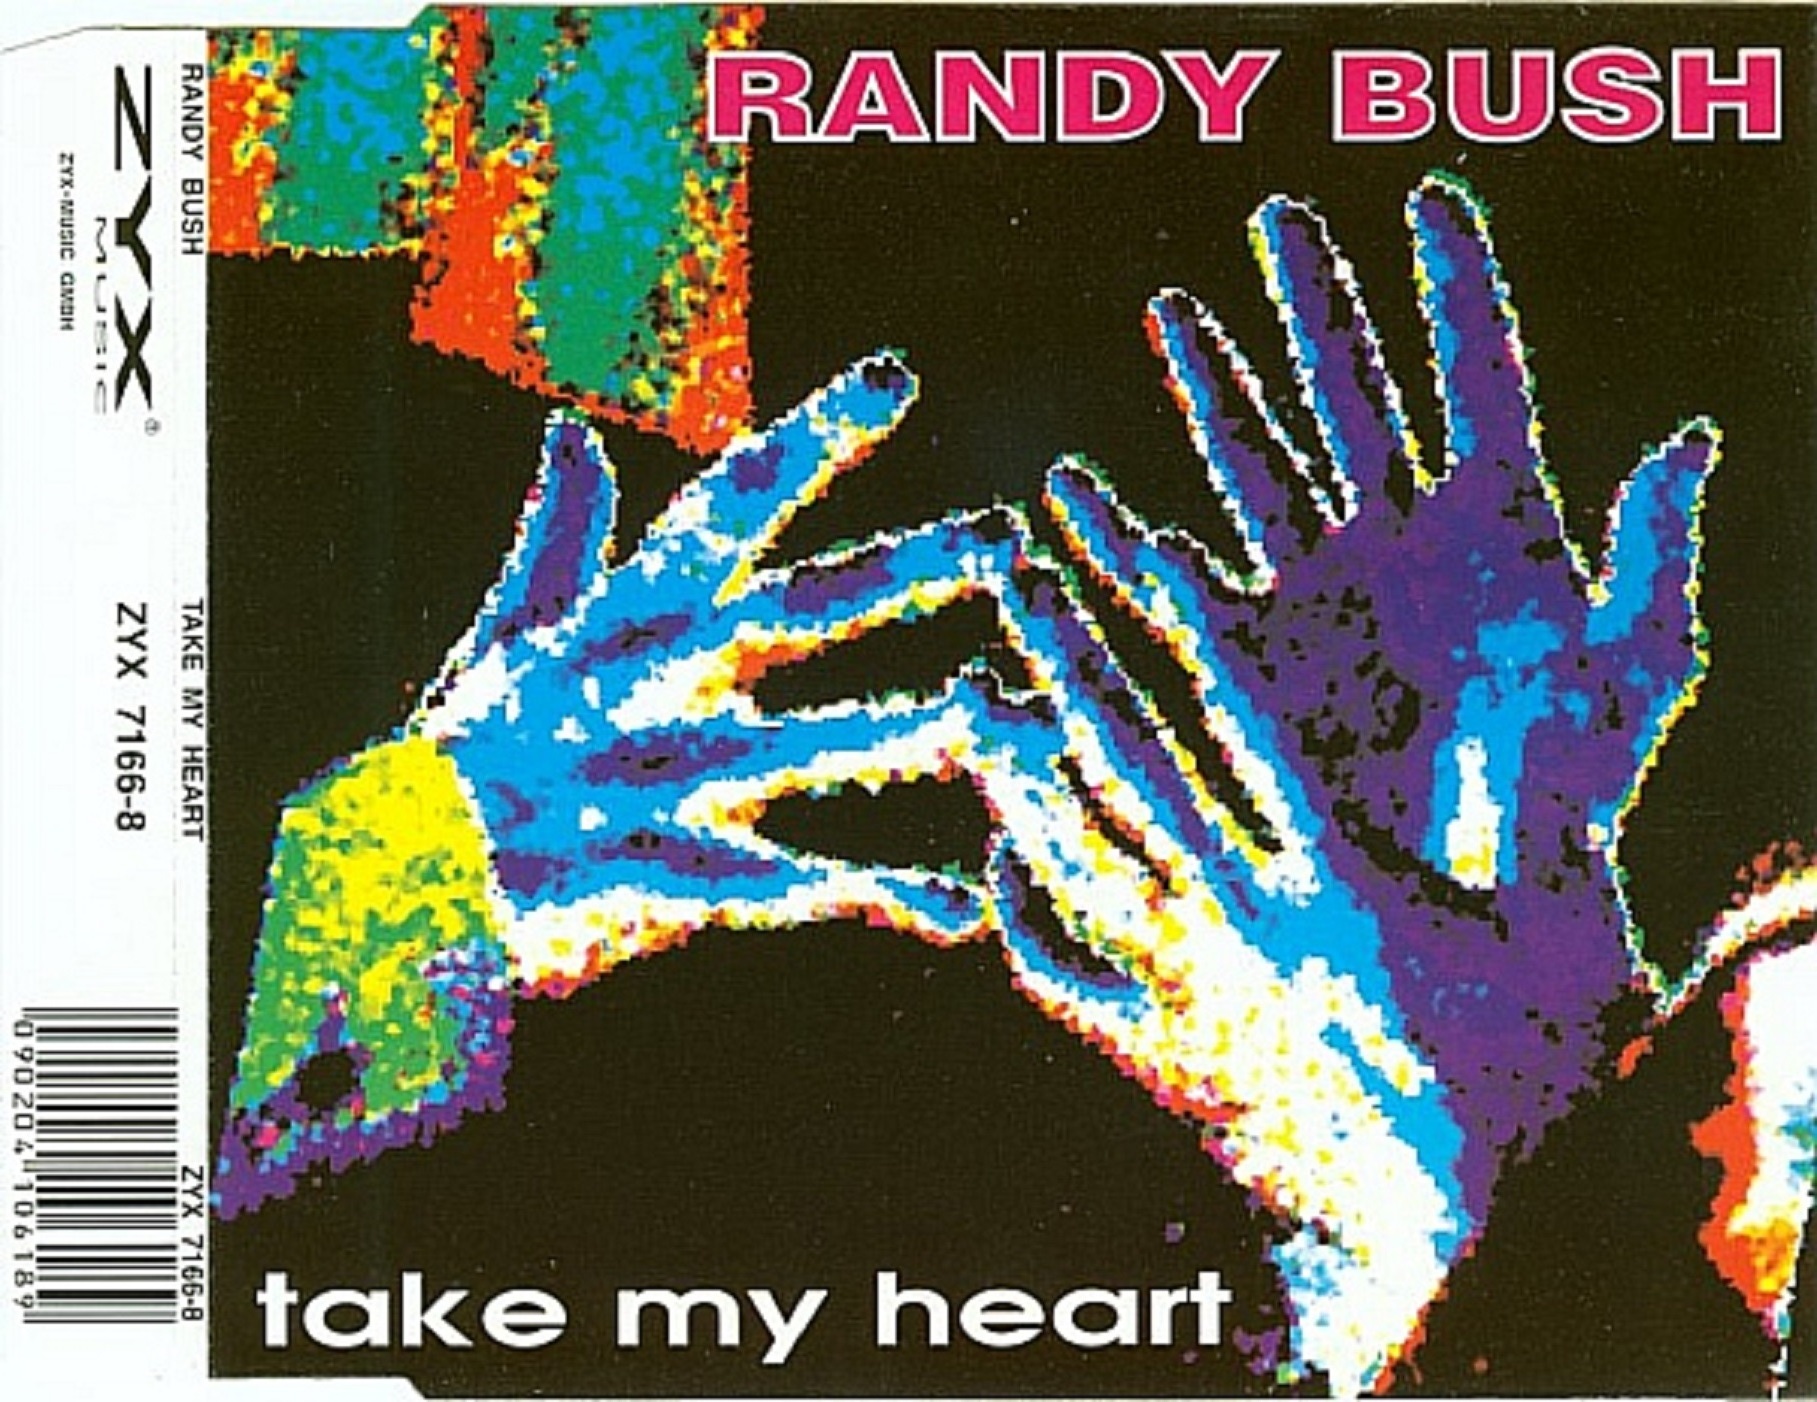 Randy Bush - Take My Heart (CDM) ZYX Music (ZYX 7166-8) Germany (1993) FLAC